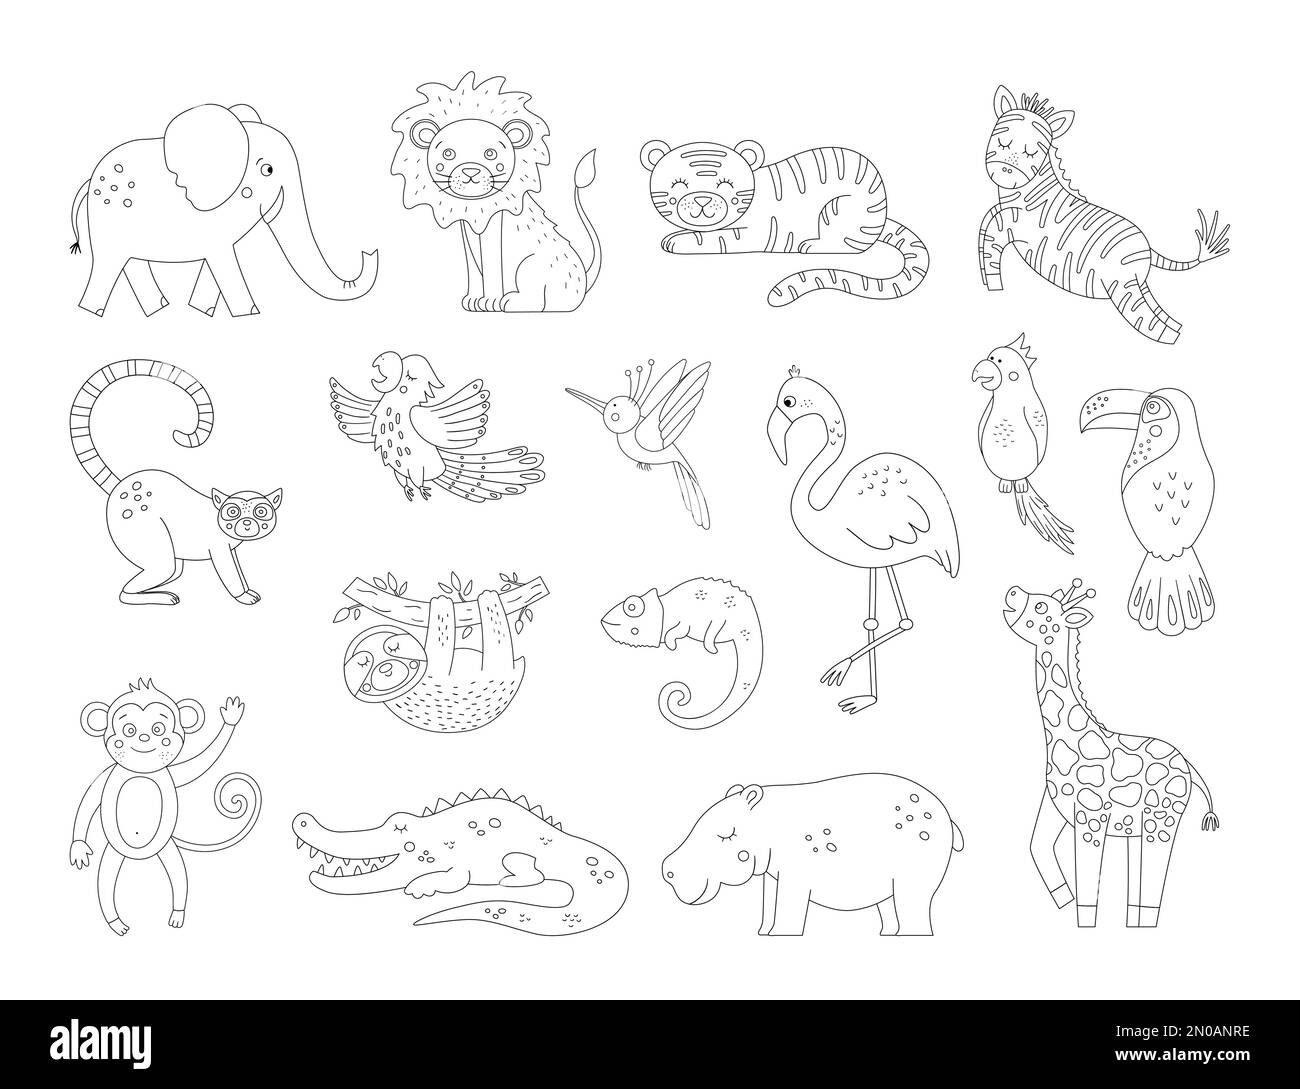 Jungle animals illustration Black and White Stock Photos & Images - Alamy